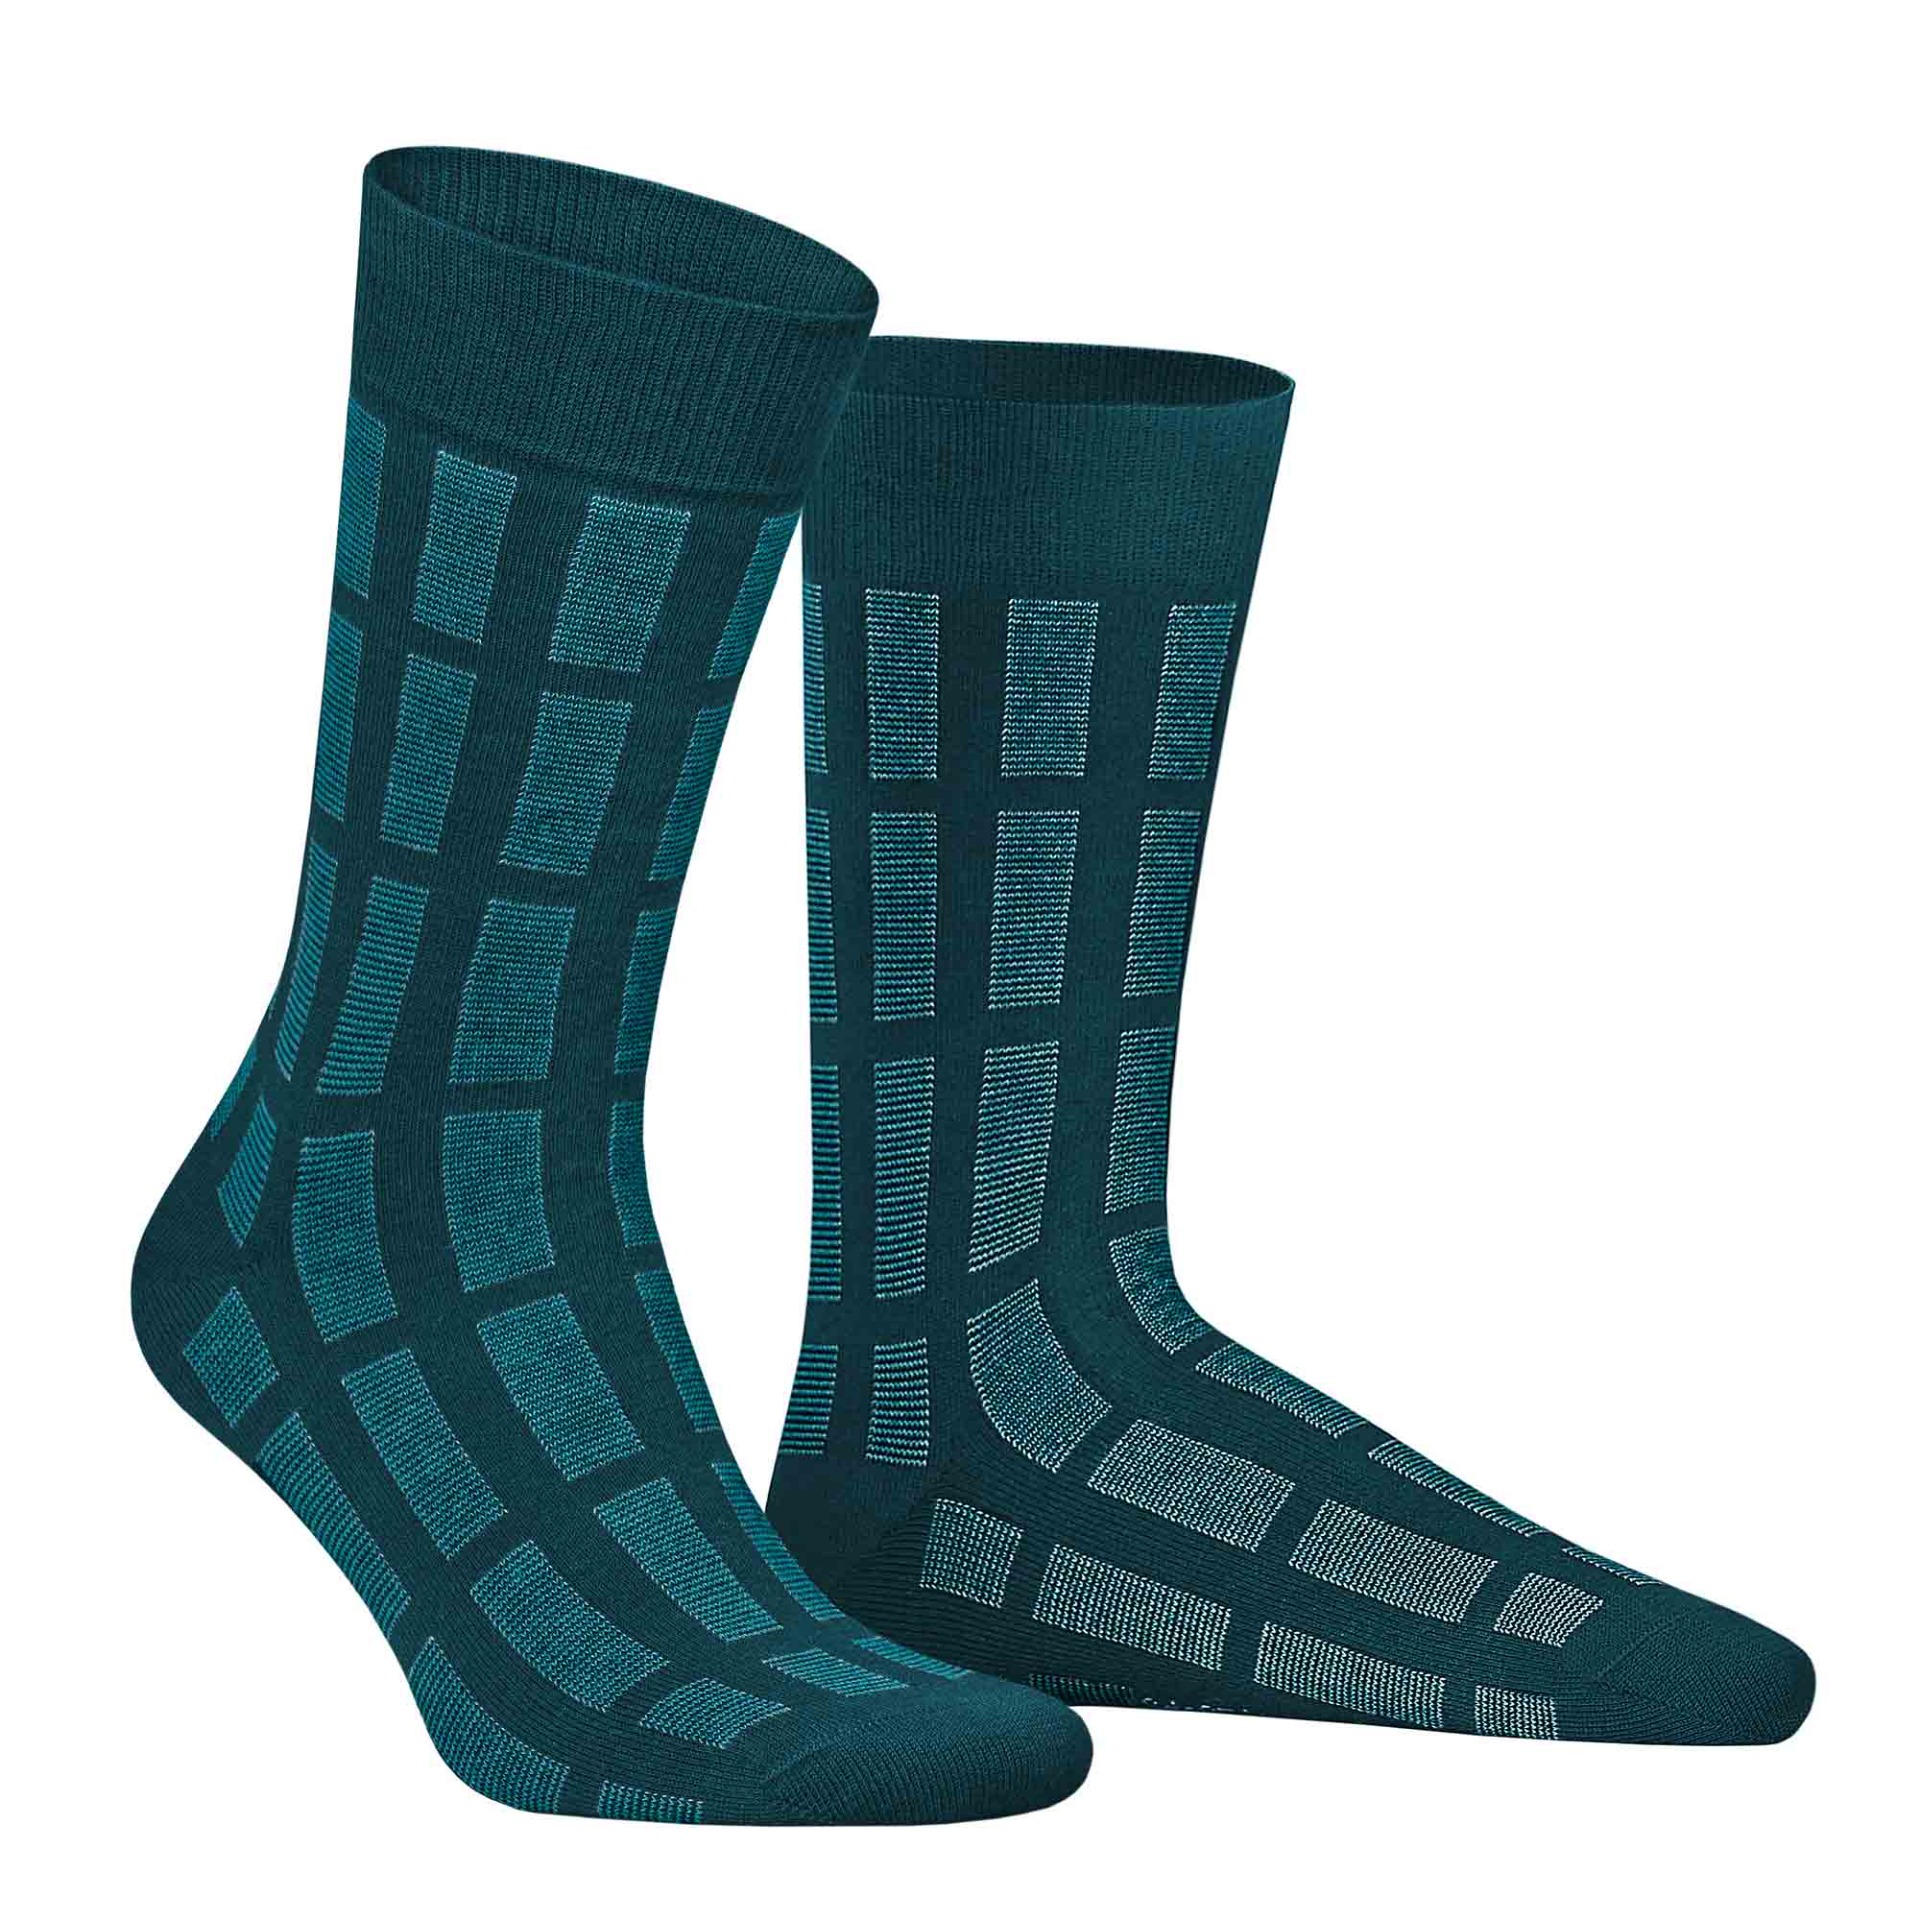 HUDSON Herren PIN -  39/42 - Socken mit Streifen-Muster - Capri blue 0111 (Blau)